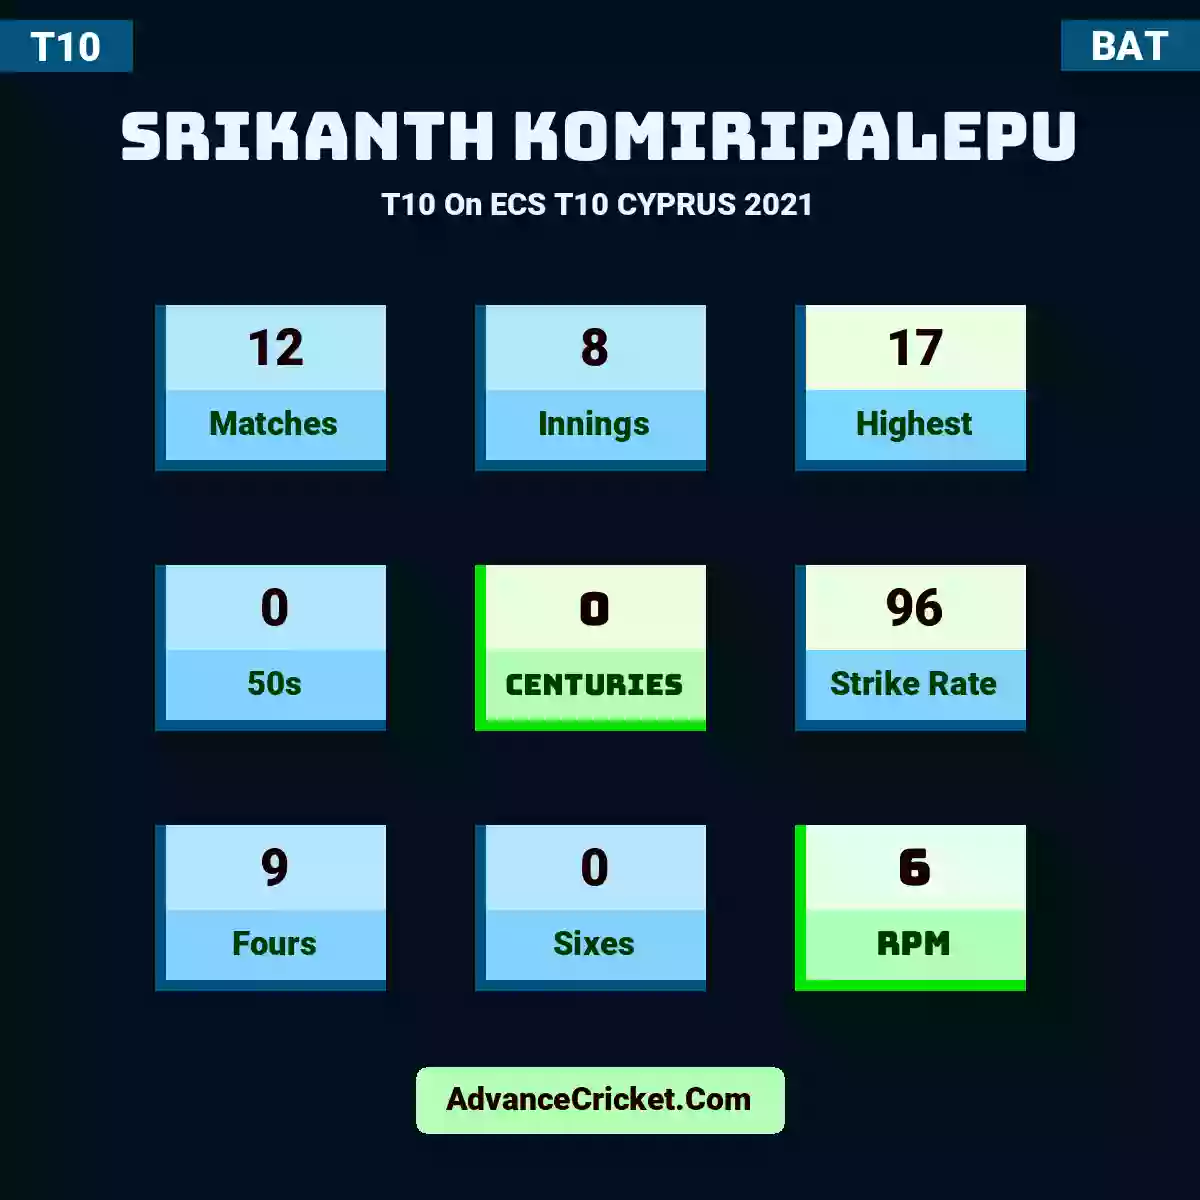 Srikanth Komiripalepu T10  On ECS T10 CYPRUS 2021, Srikanth Komiripalepu played 12 matches, scored 17 runs as highest, 0 half-centuries, and 0 centuries, with a strike rate of 96. S.Komiripalepu hit 9 fours and 0 sixes, with an RPM of 6.